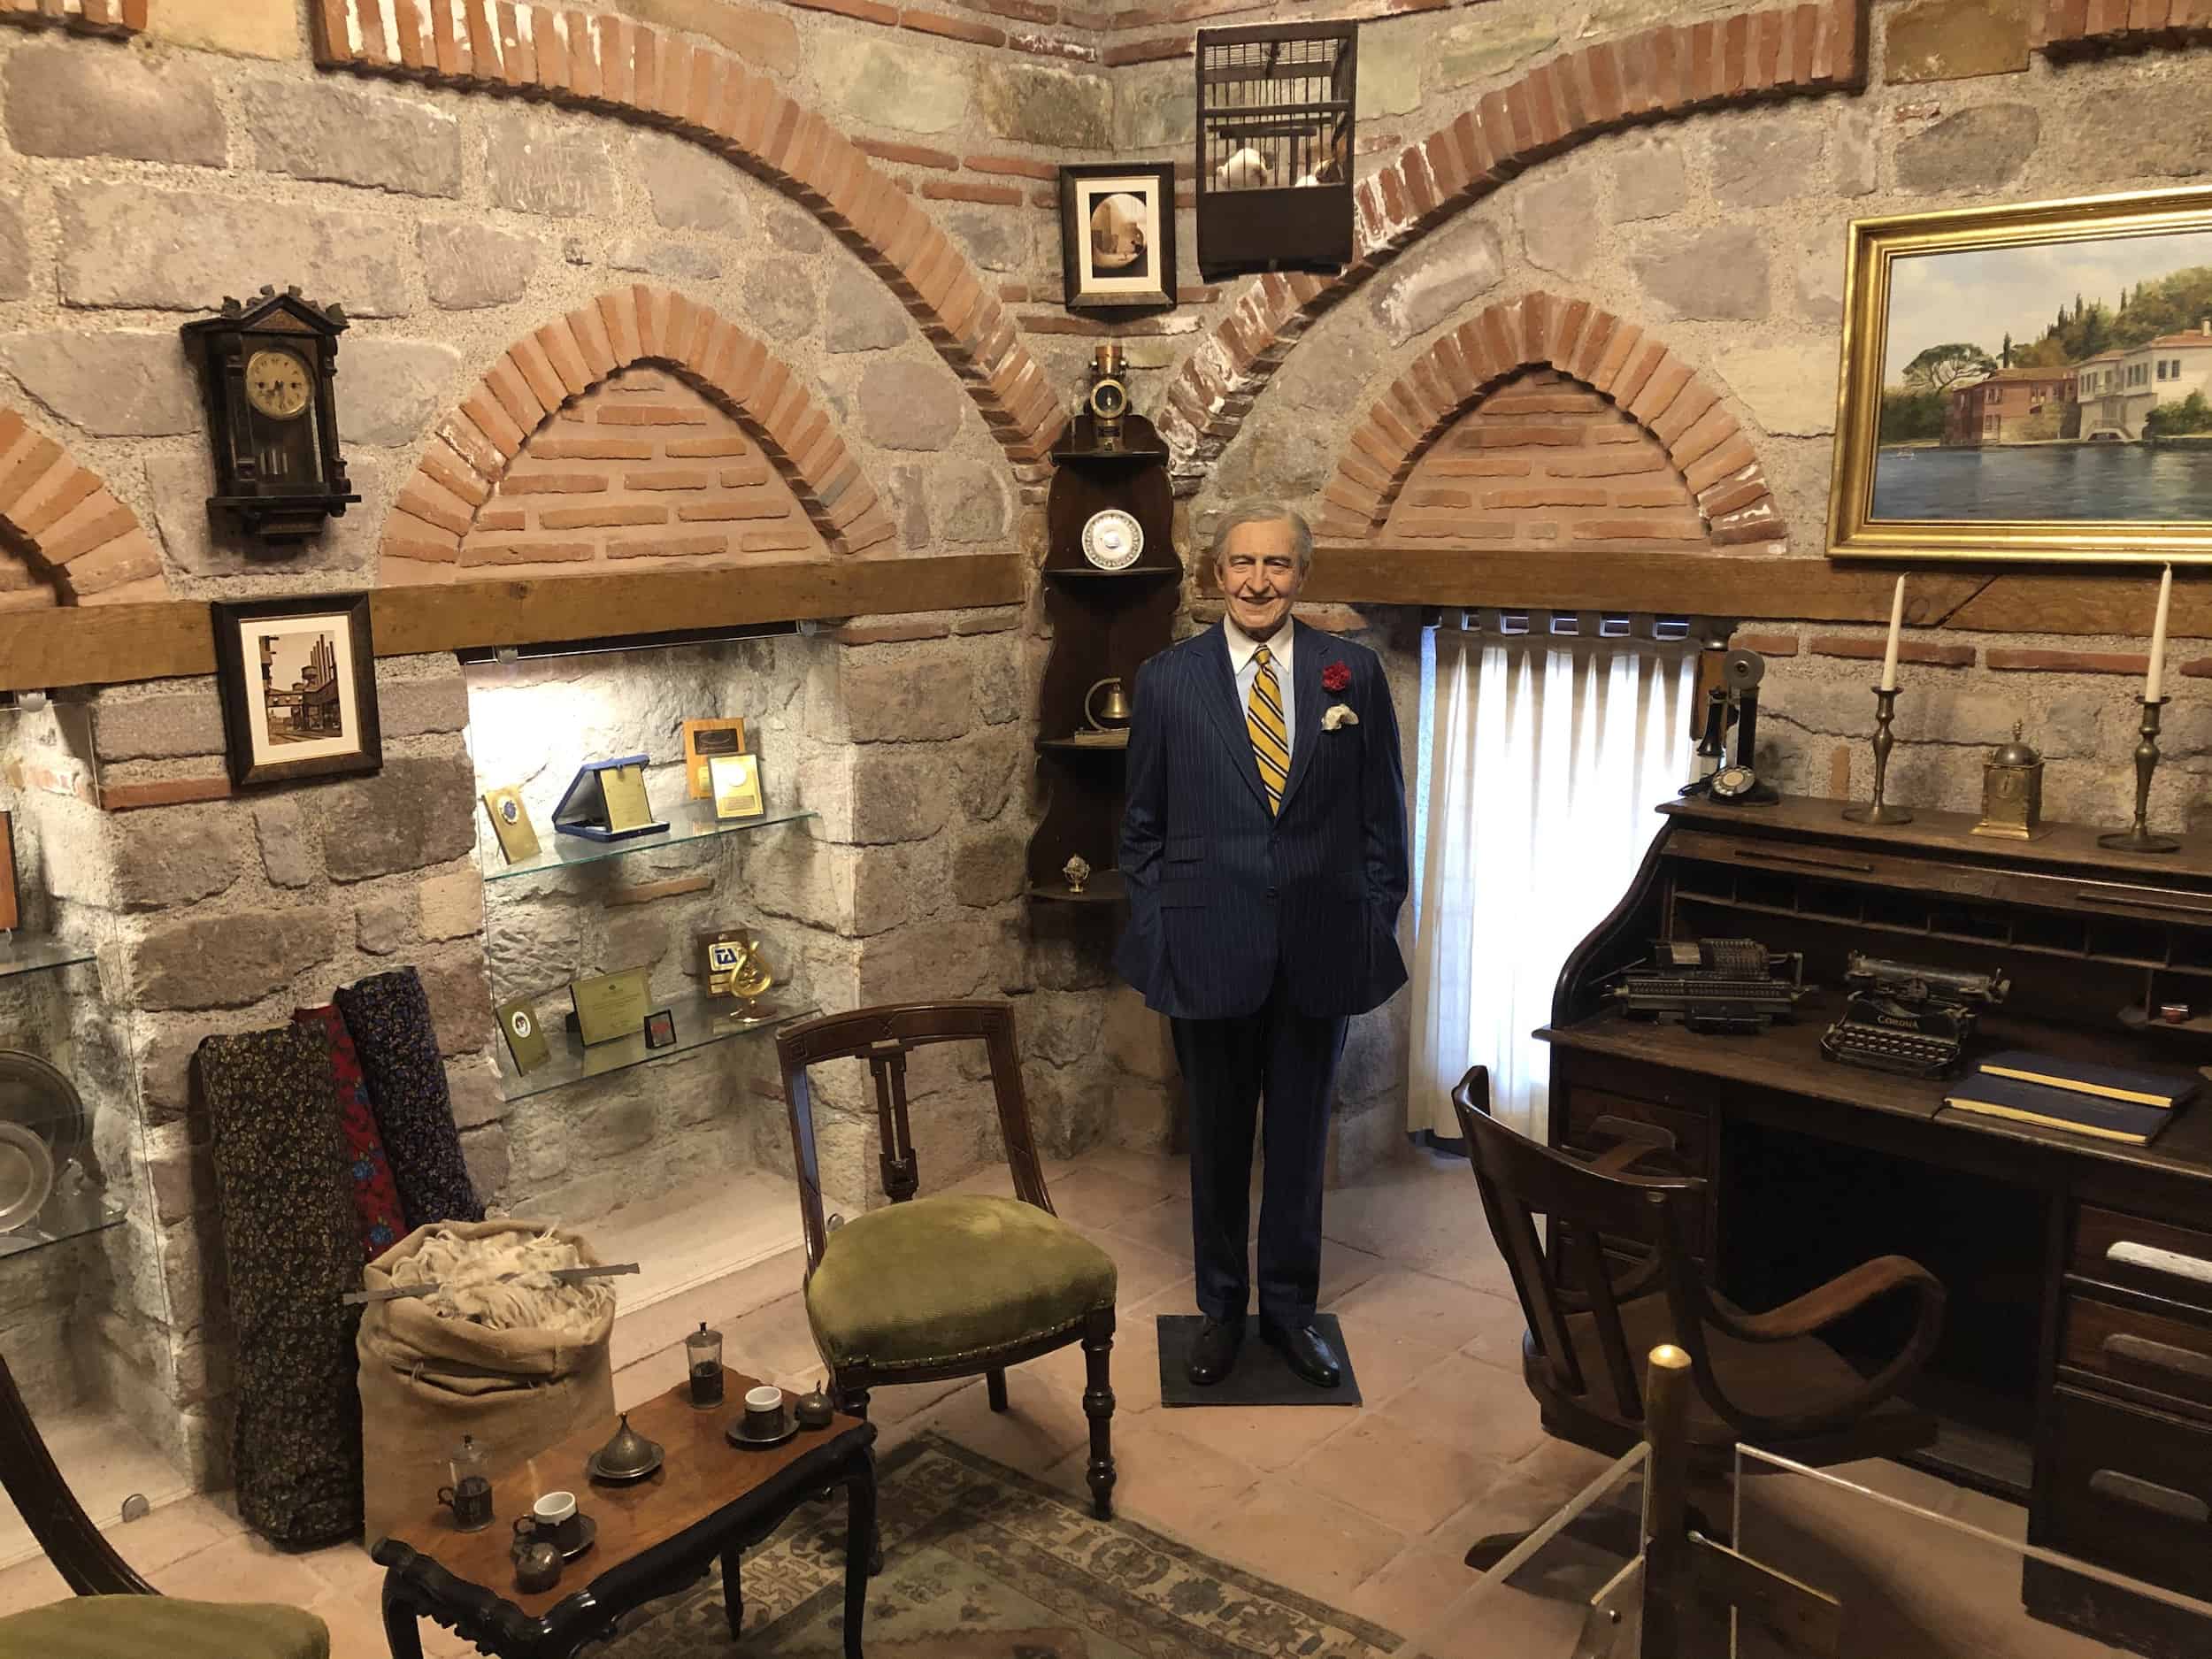 Old Ankara office at the Rahmi M. Koç Museum in Ankara, Turkey